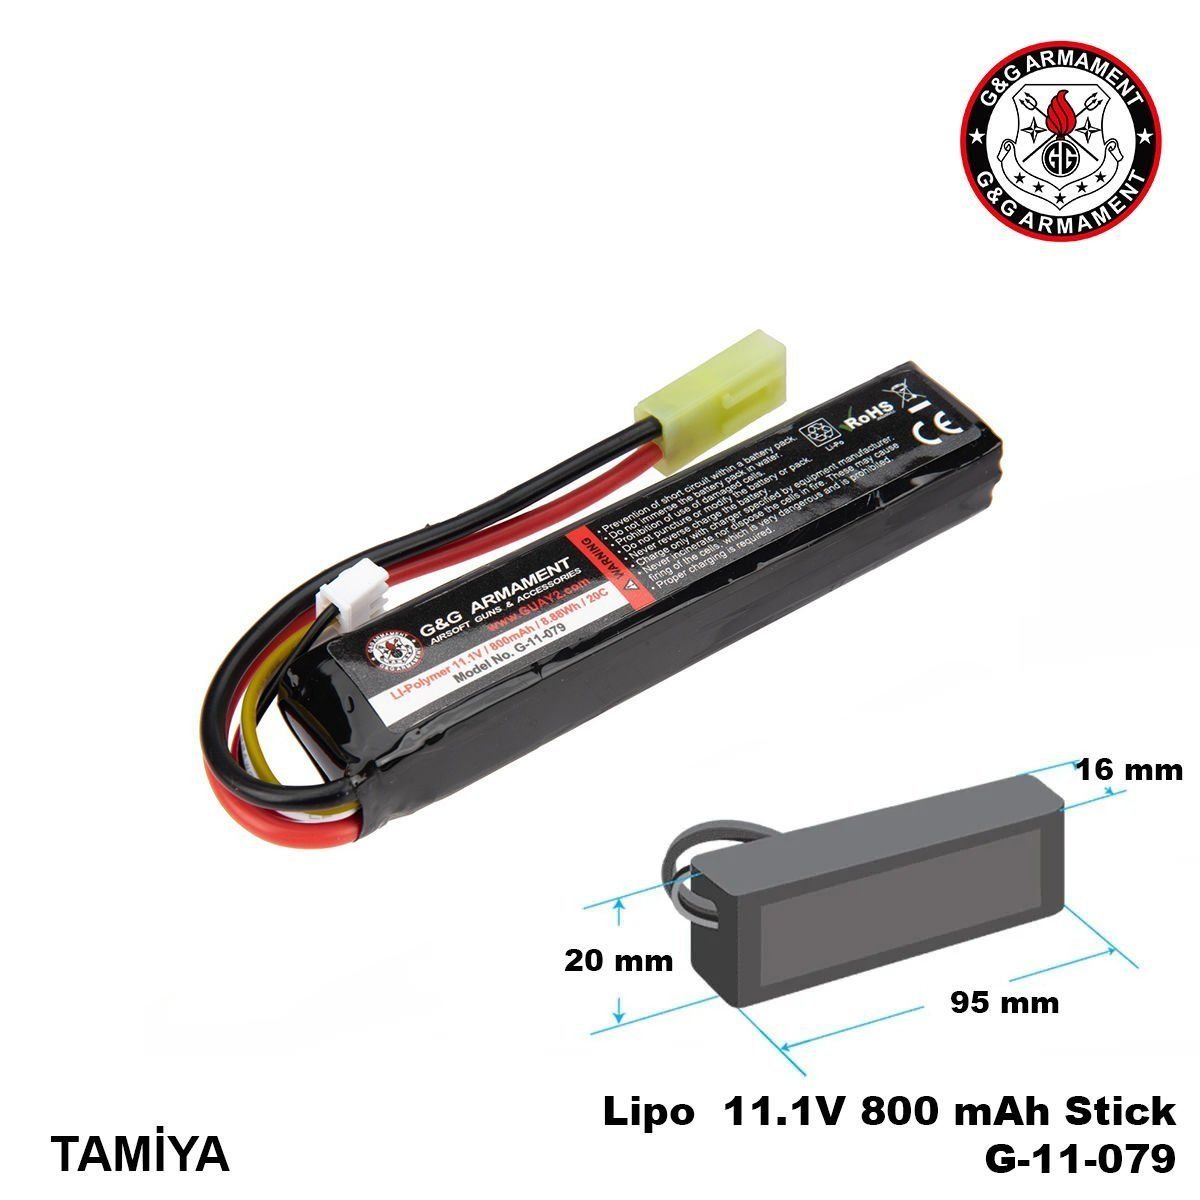 Lipo Pil G&G 11.1V 800 mAh Stick Tamiya G-11-079